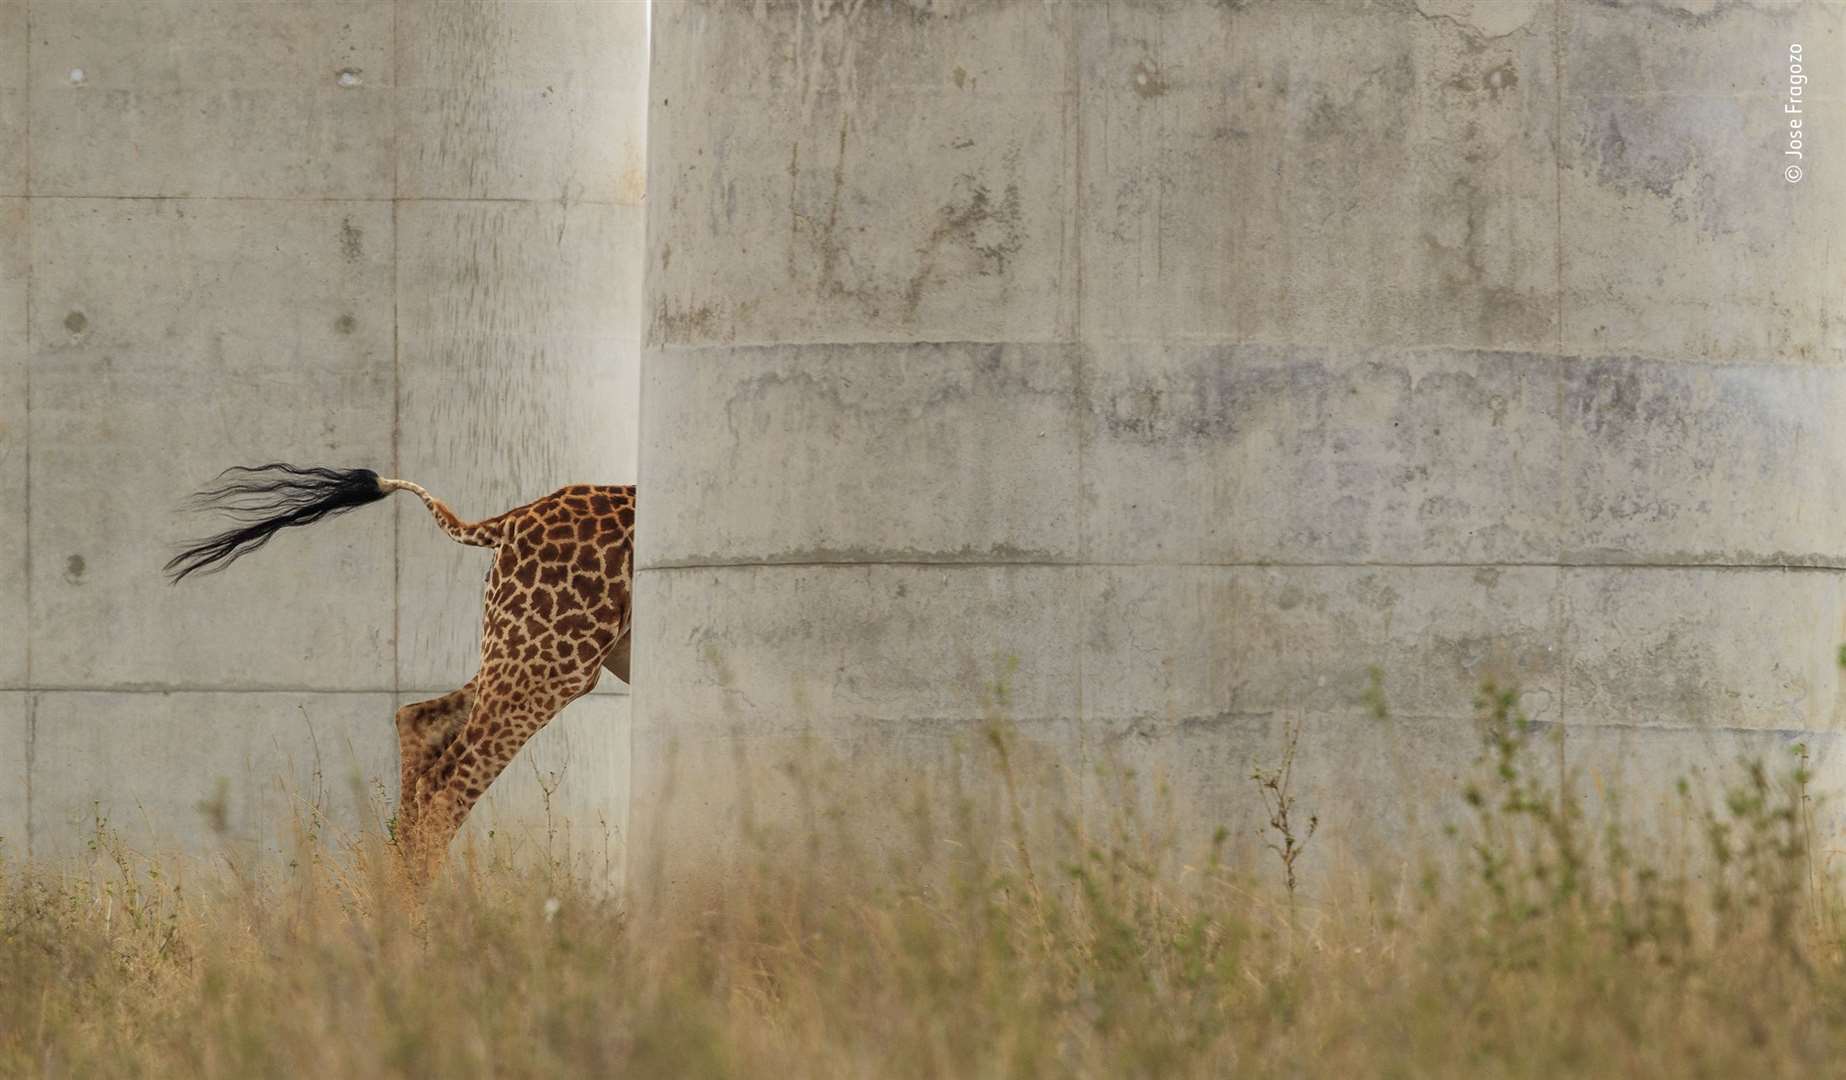 Giraffe disappearing between concrete railway pillars in Nairobi, Kenya (Jose Fragozo/Wildlife Photographer of the Year/PA)